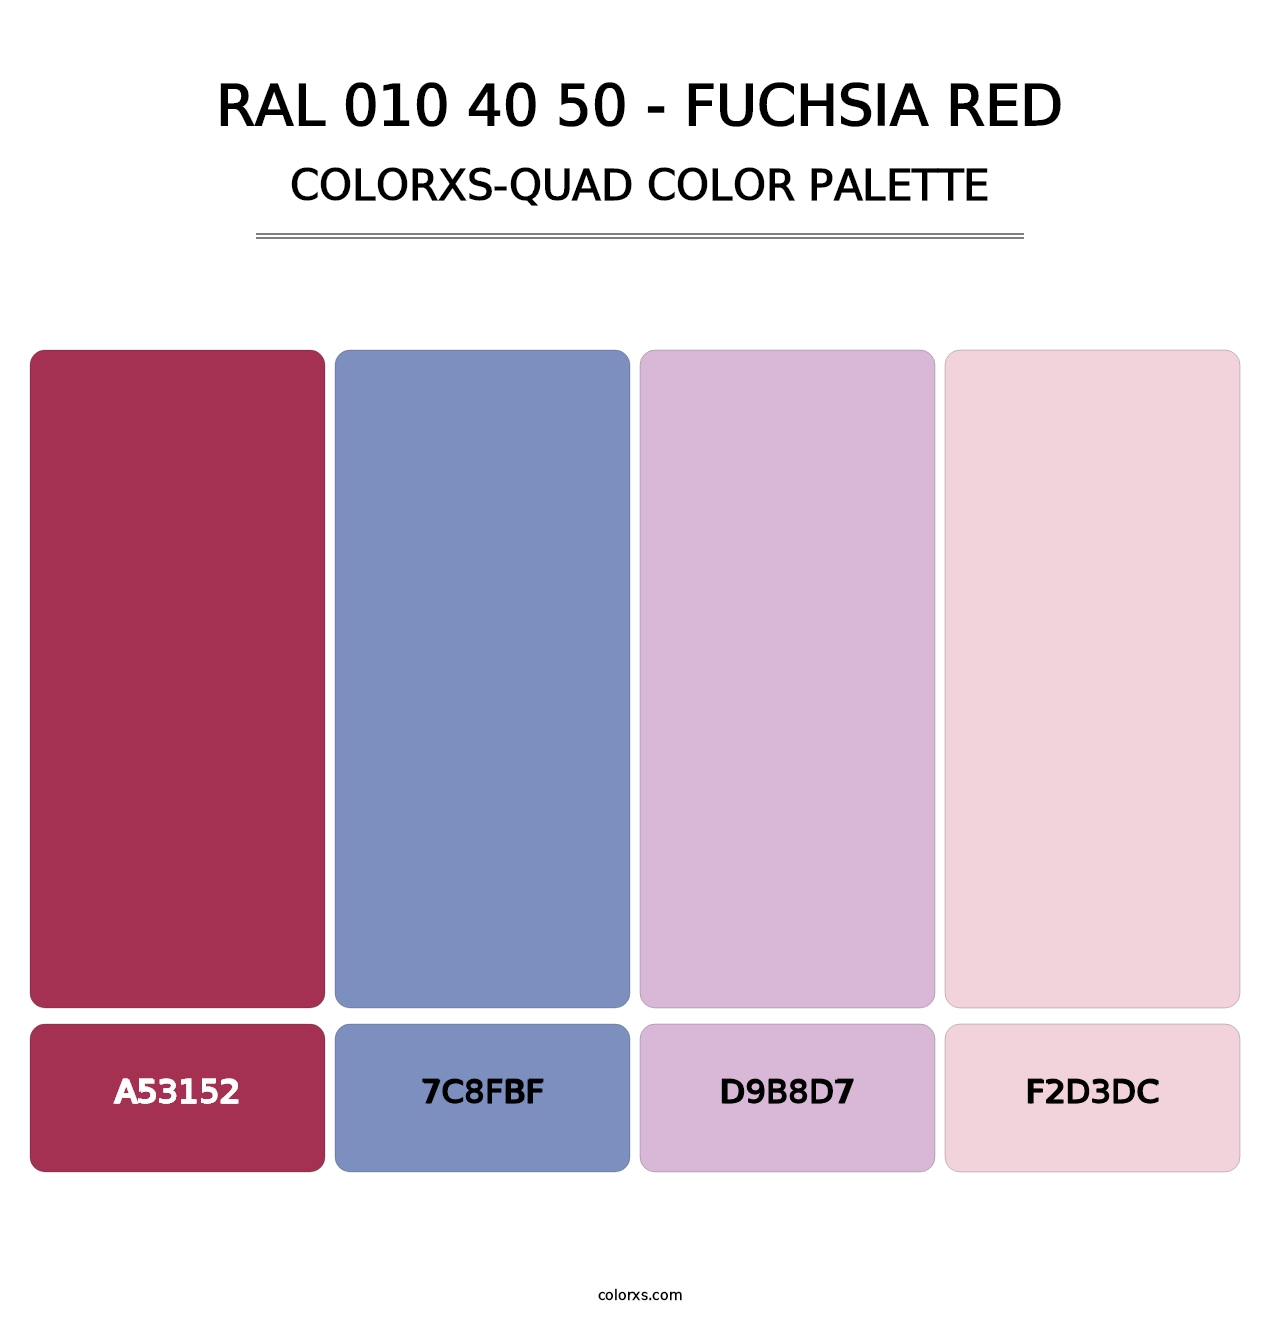 RAL 010 40 50 - Fuchsia Red - Colorxs Quad Palette